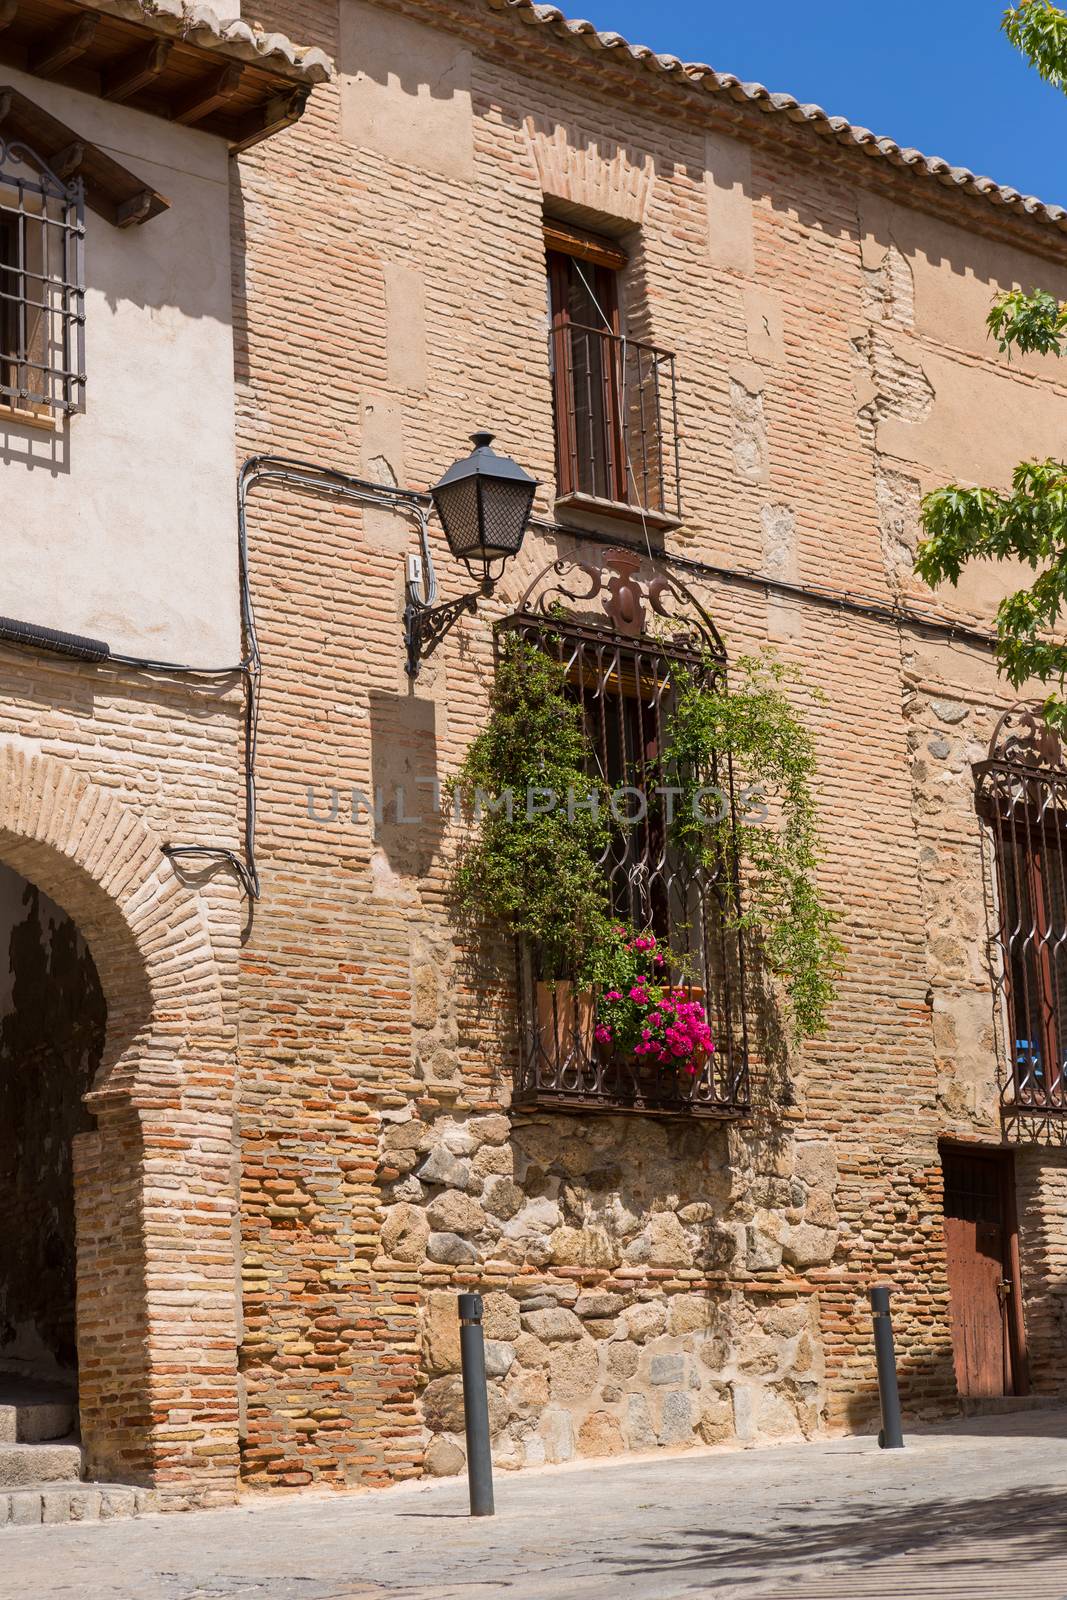 Toledo narrow street by zittto